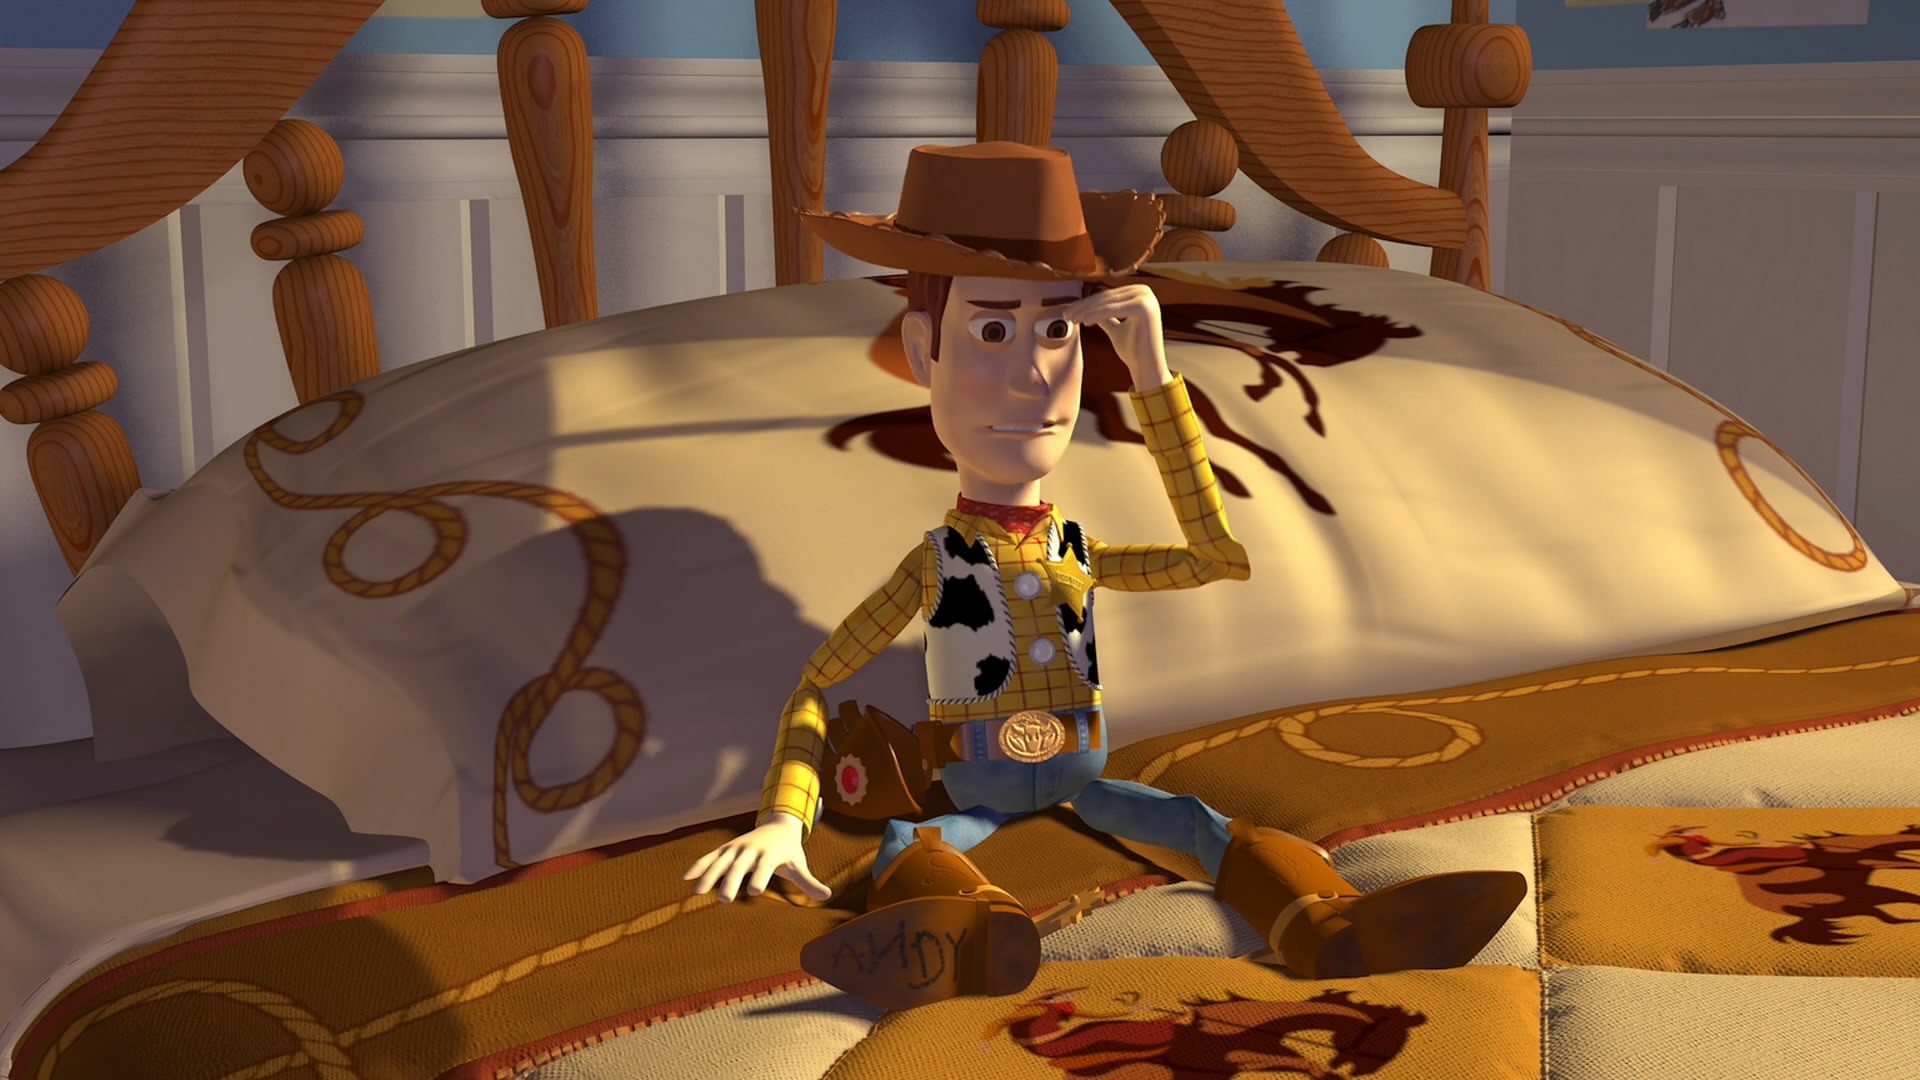 Sheriff Woody, Toy Story, Disney Pixar Wallpaper